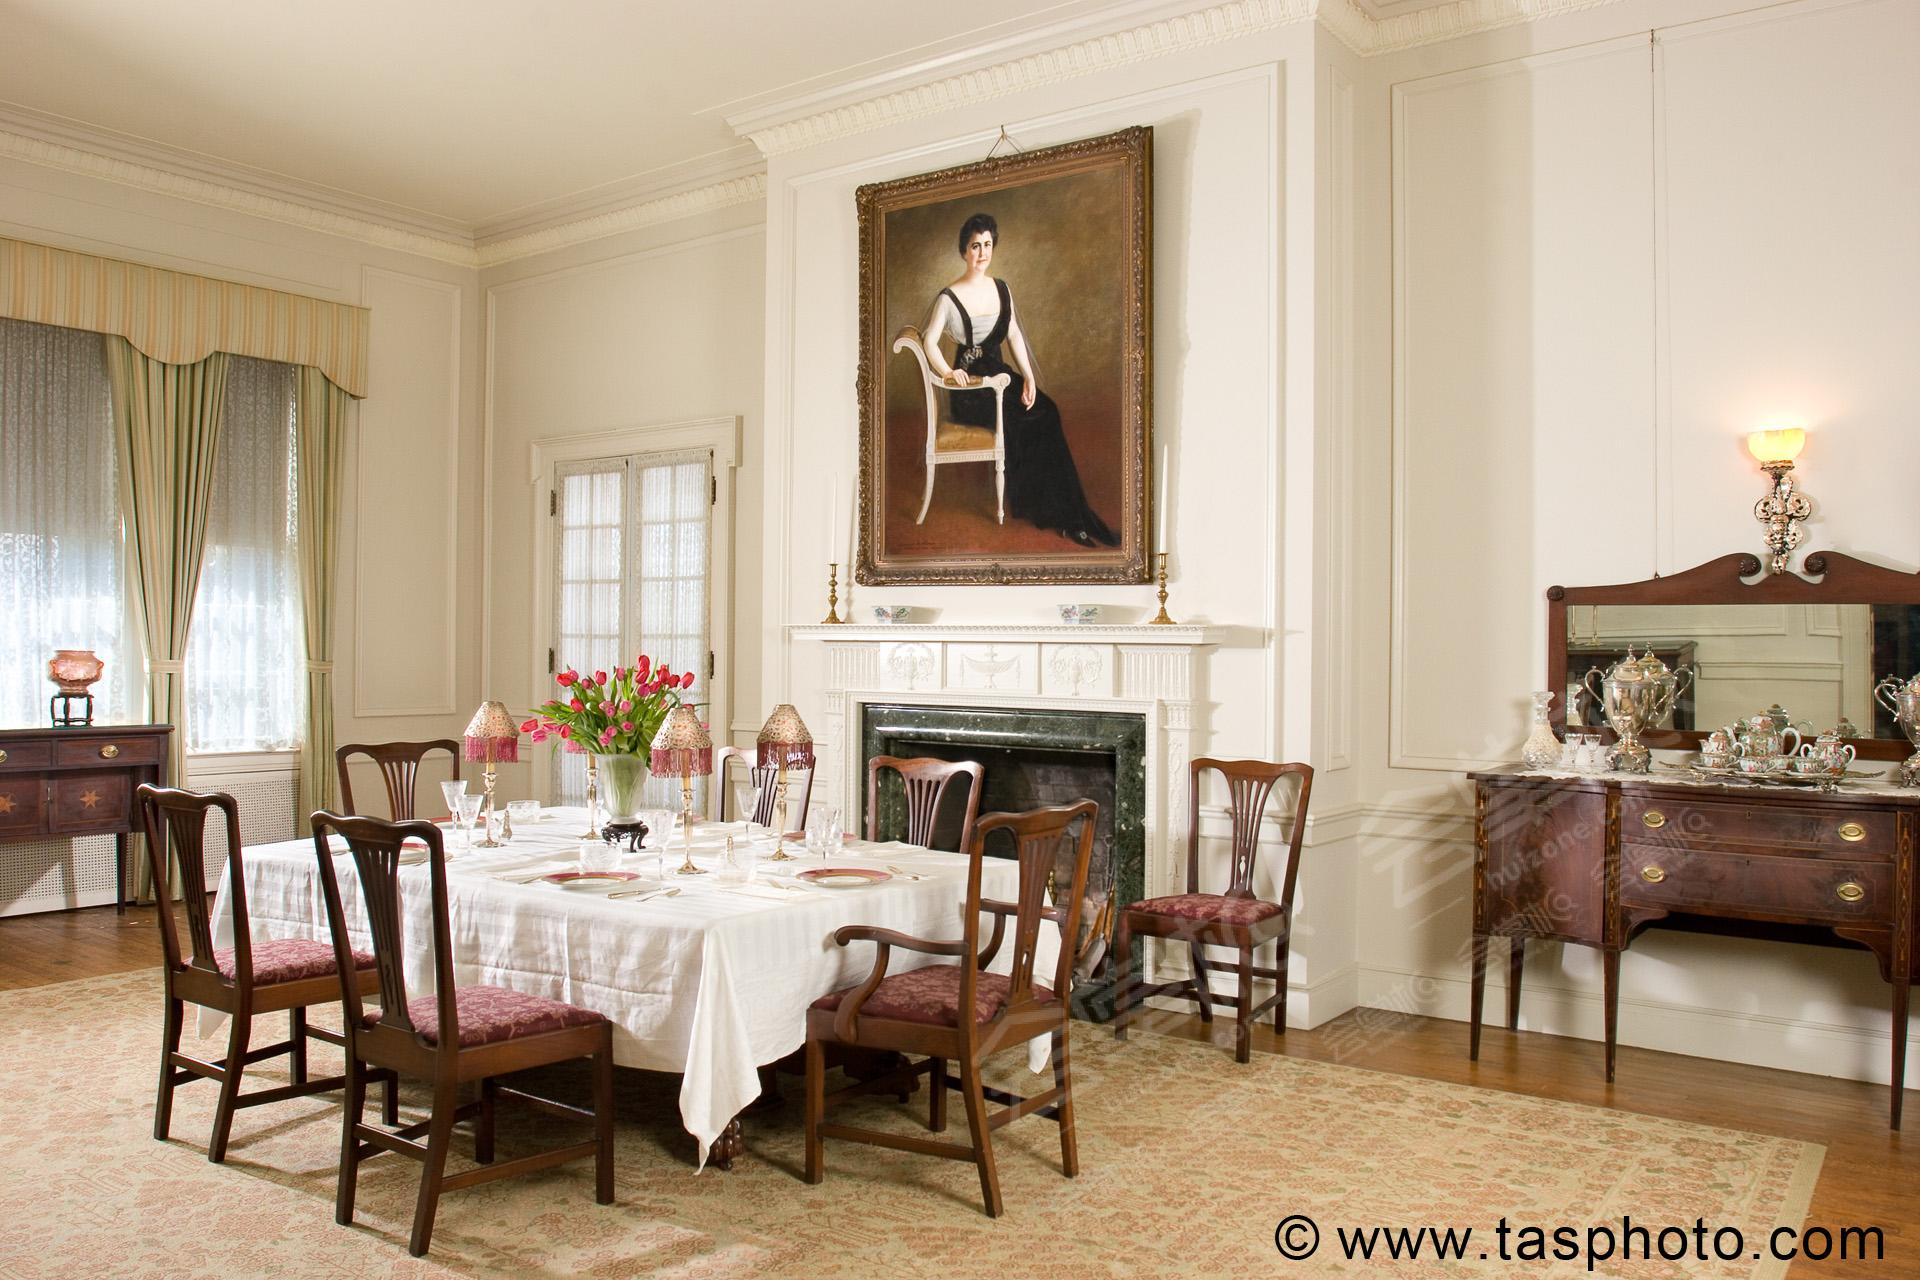 Classic Washington Elegance in Historic Mansion and Garden